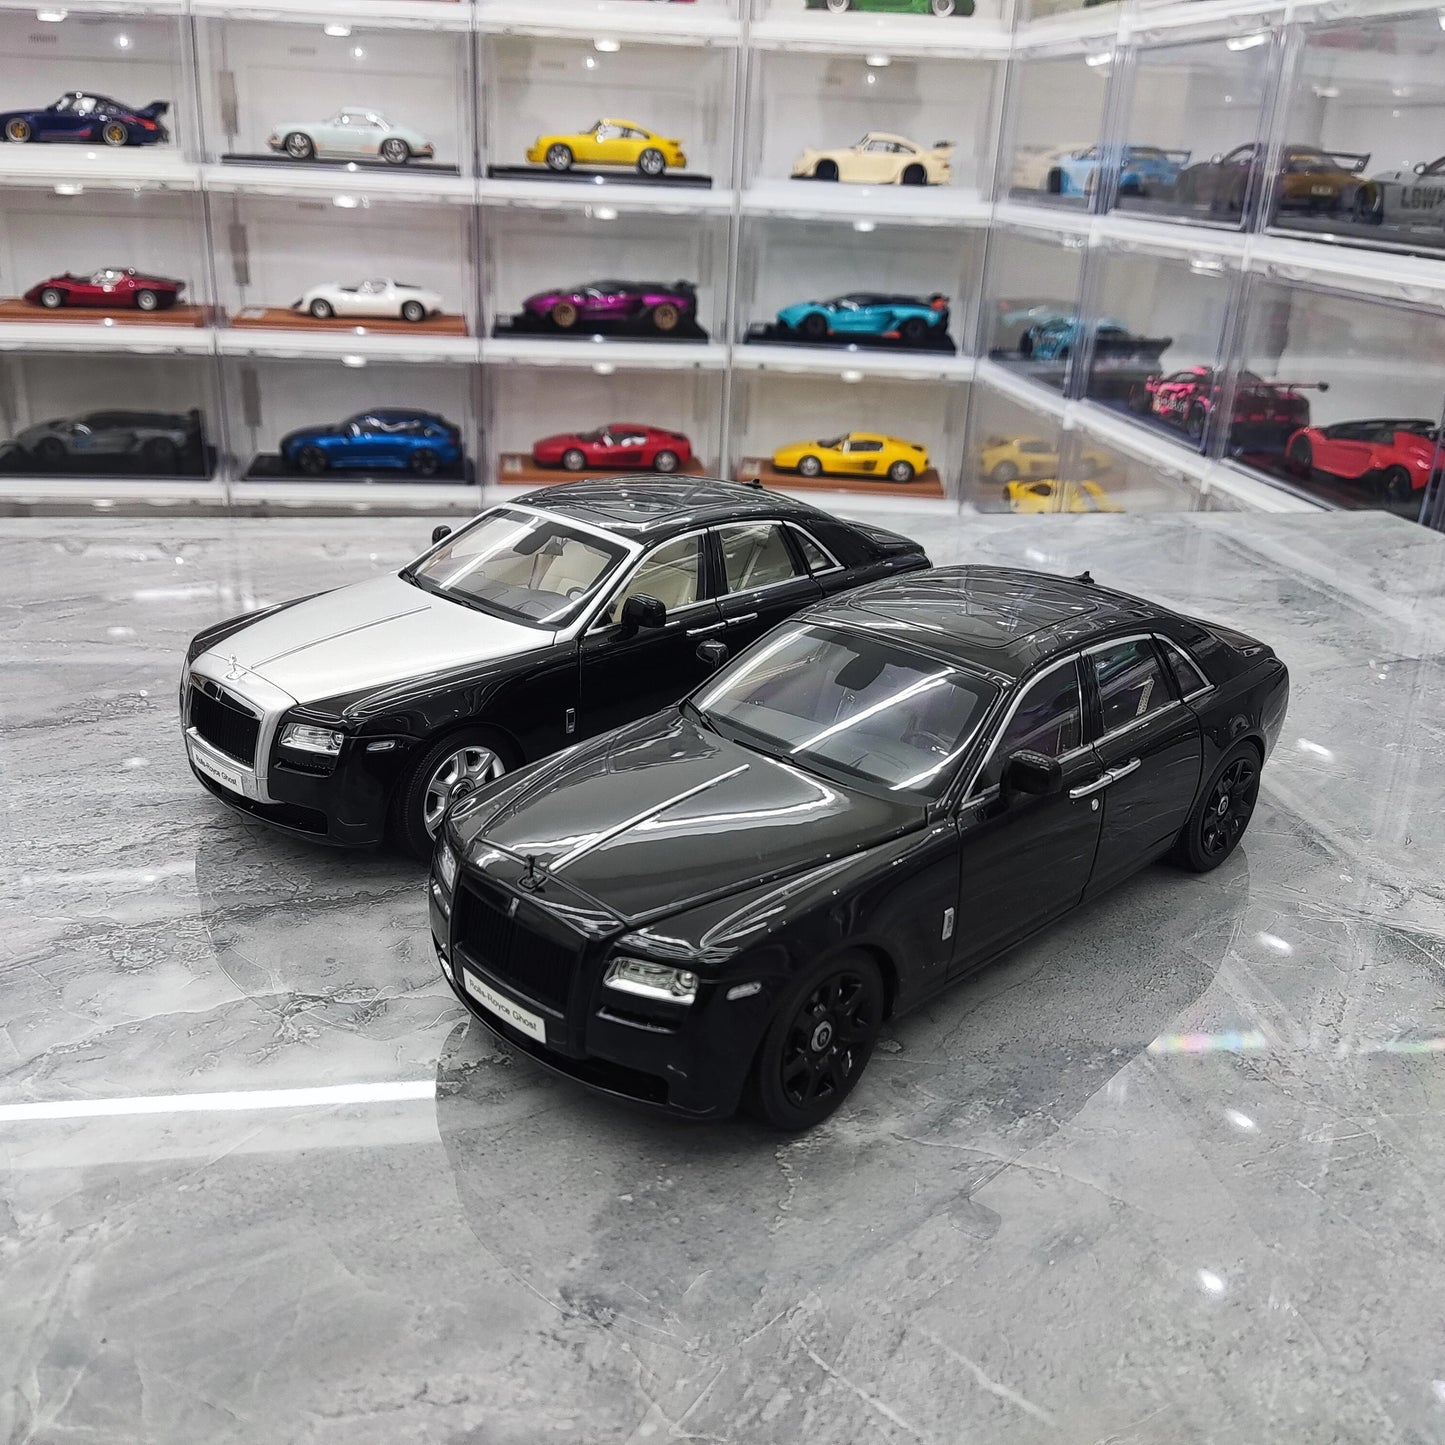 Rolls Royce ghost Limousine Black Alloy Car Model Die Cast 1/18 Scale